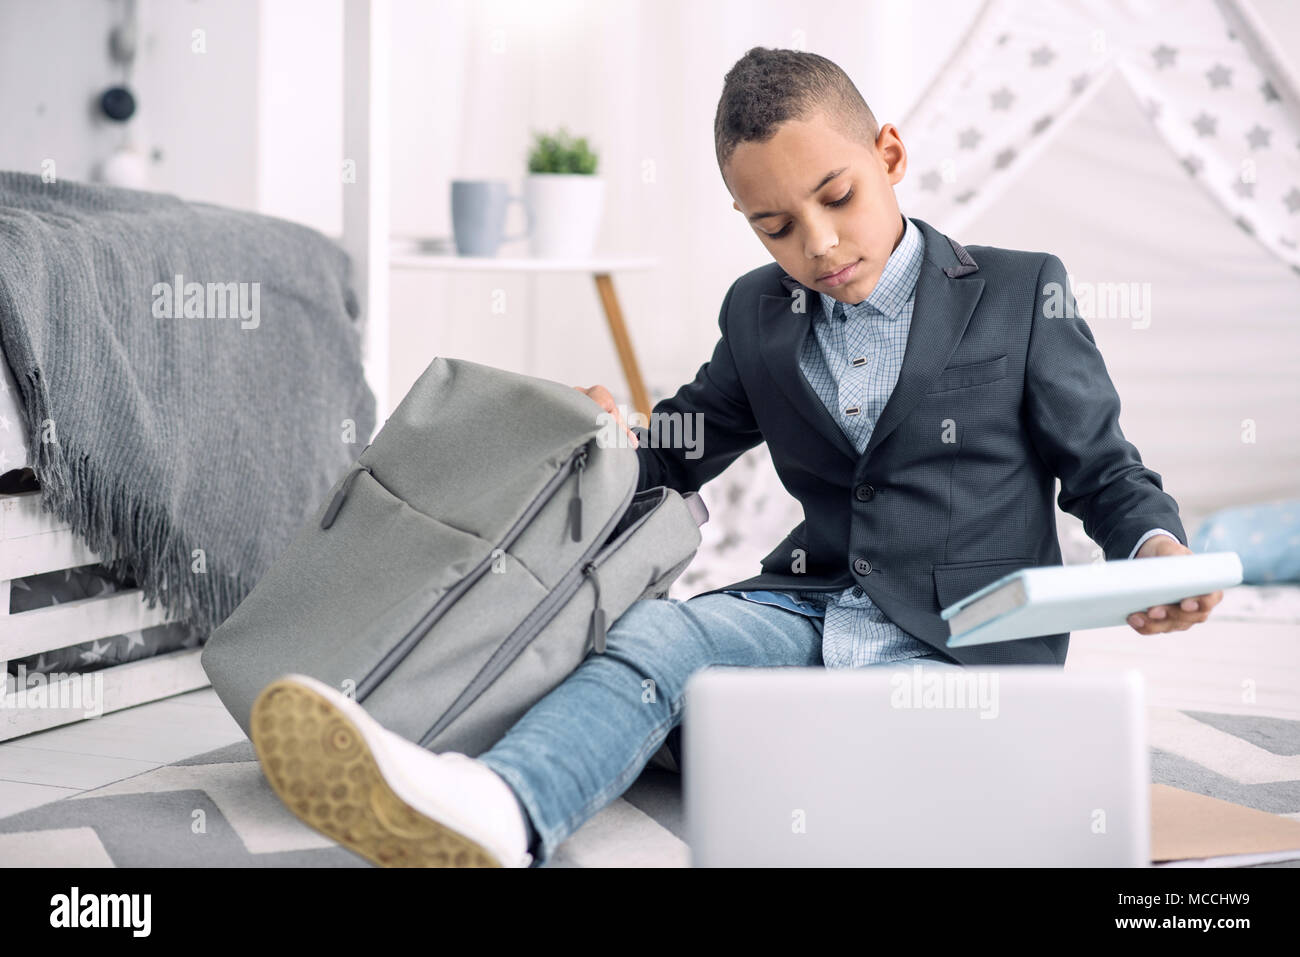 Attentive little boy packing notebooks Stock Photo